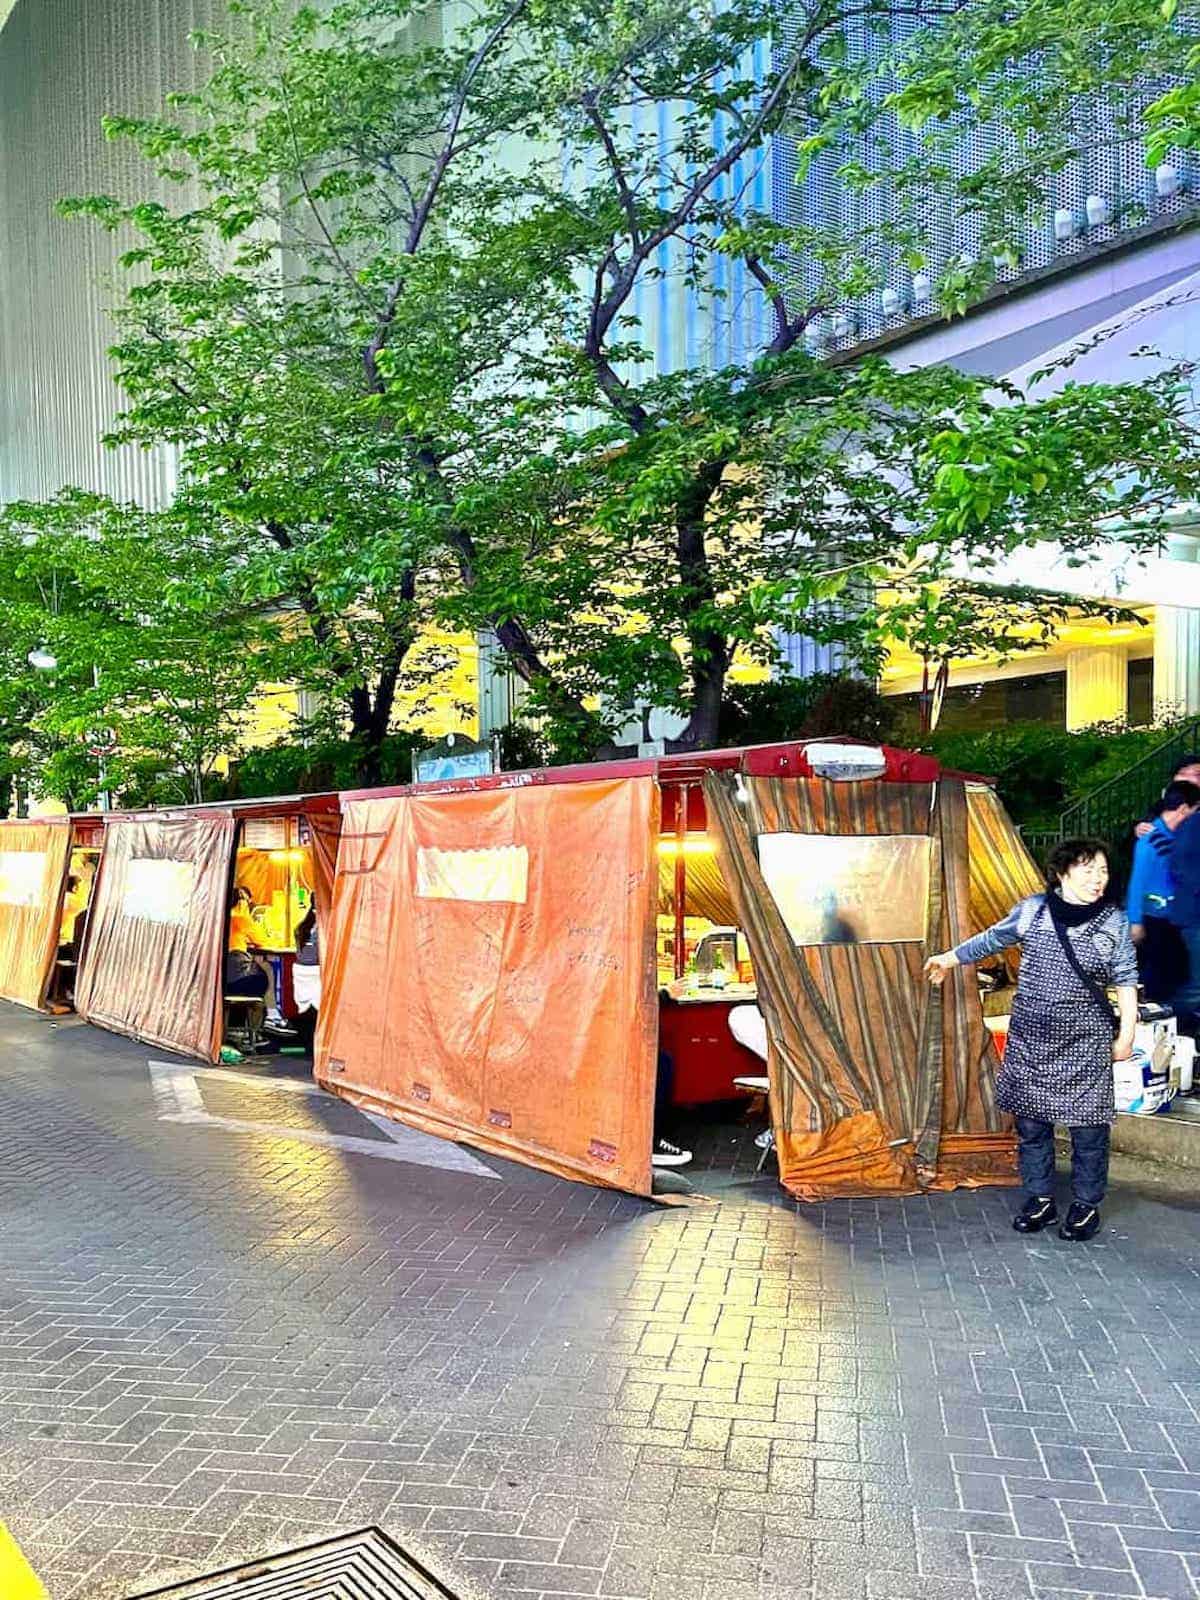 Pojiongmacha orange street food tents in Seomyeon, Busan, Korea.